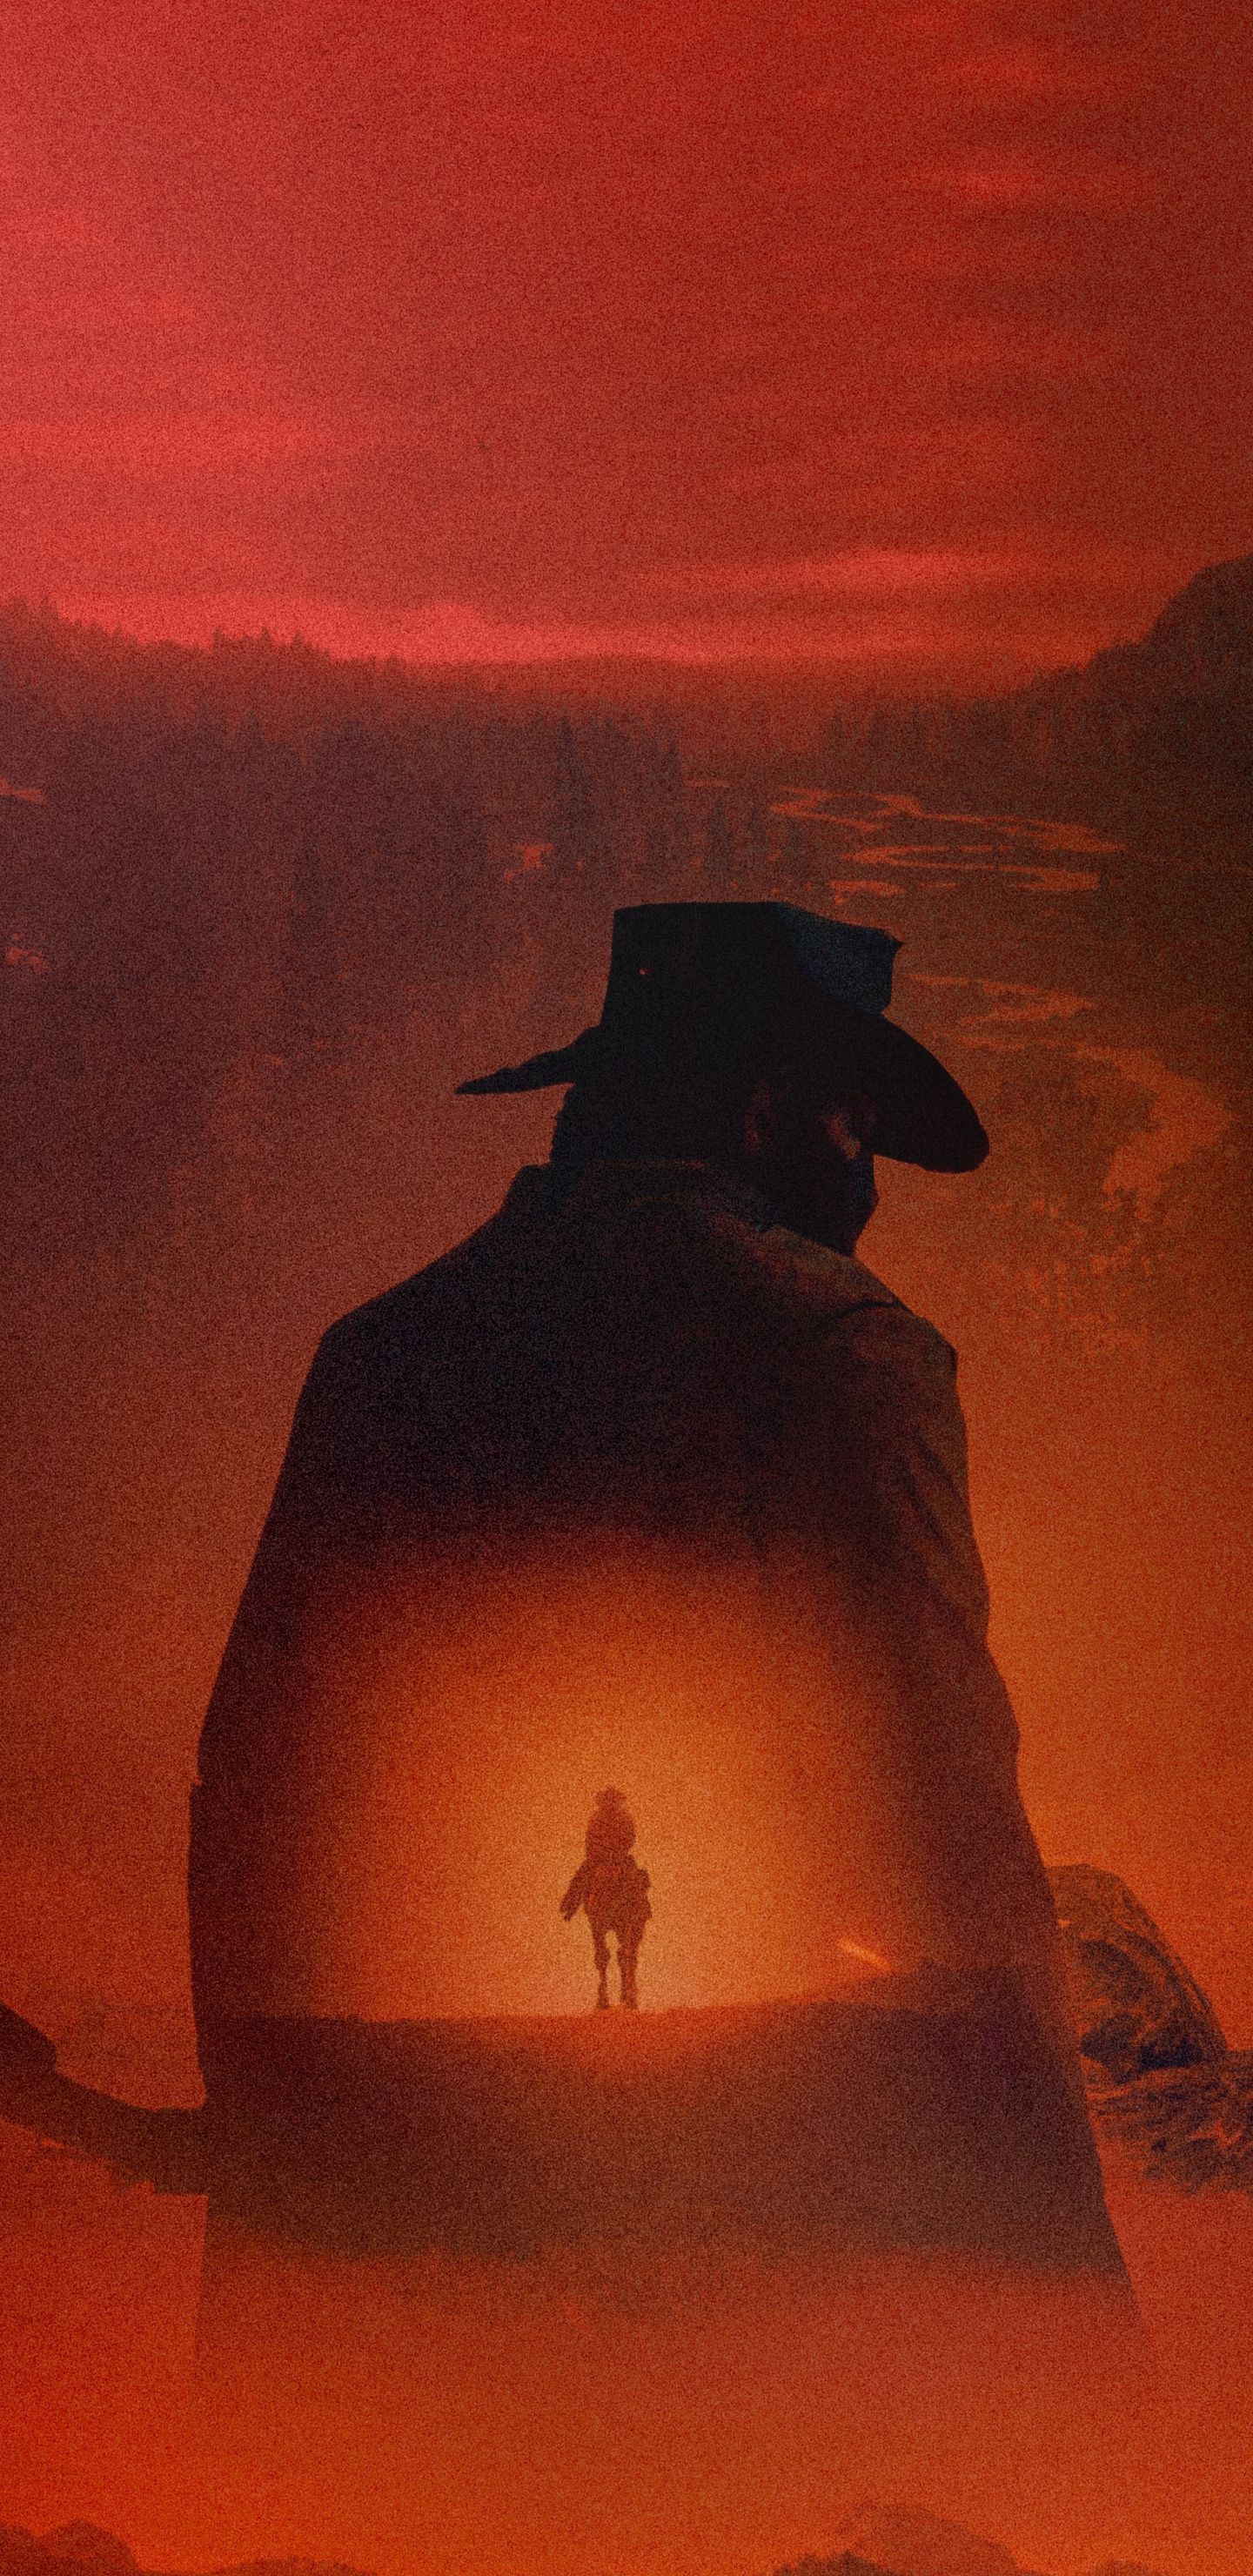 Red Dead Redemption cowboy, poster, 1440x2960 wallpaper